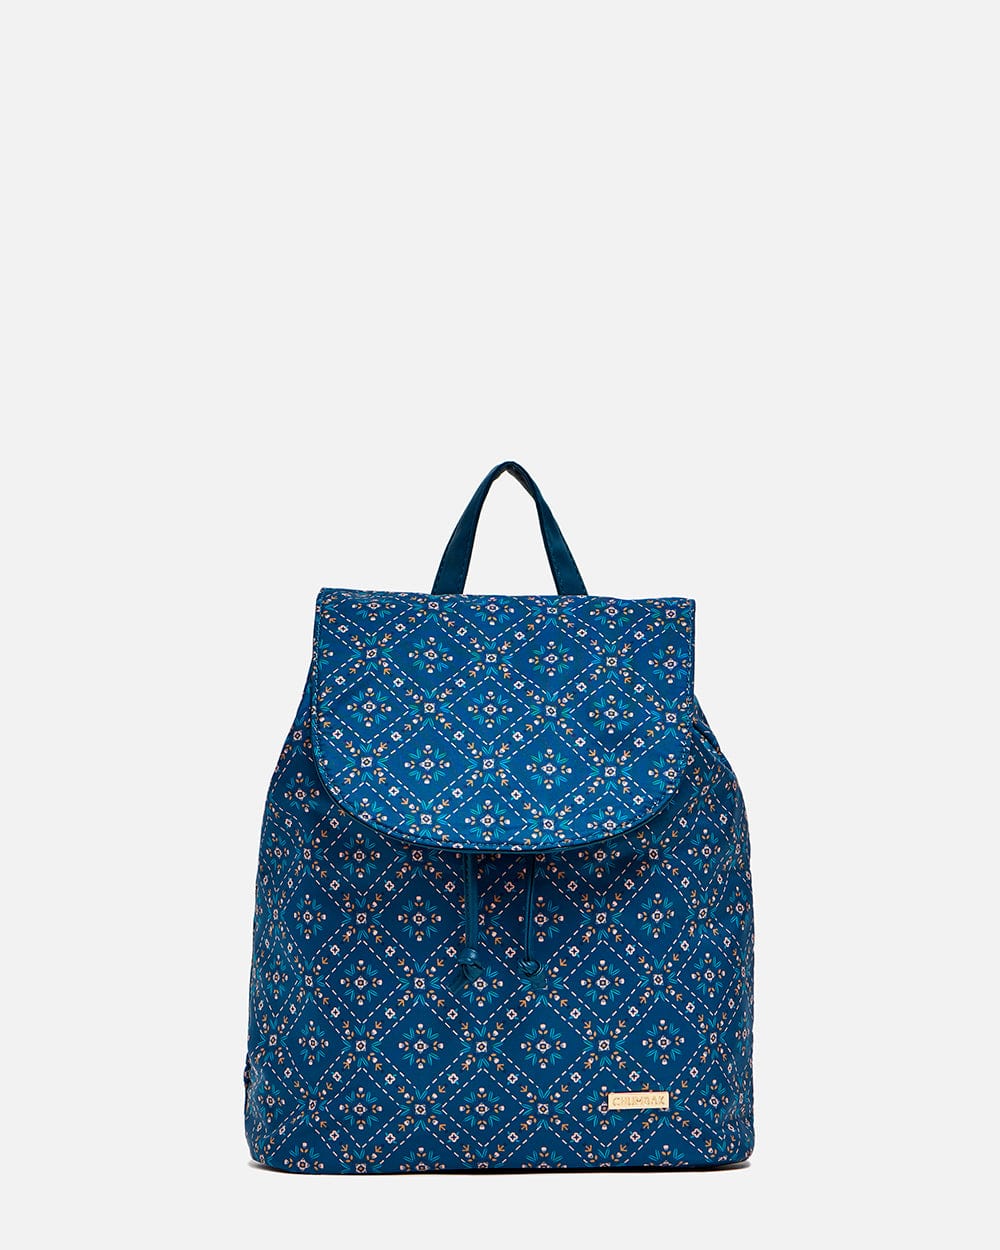 Geometric Flora Backpack Navy Blue - Chumbak